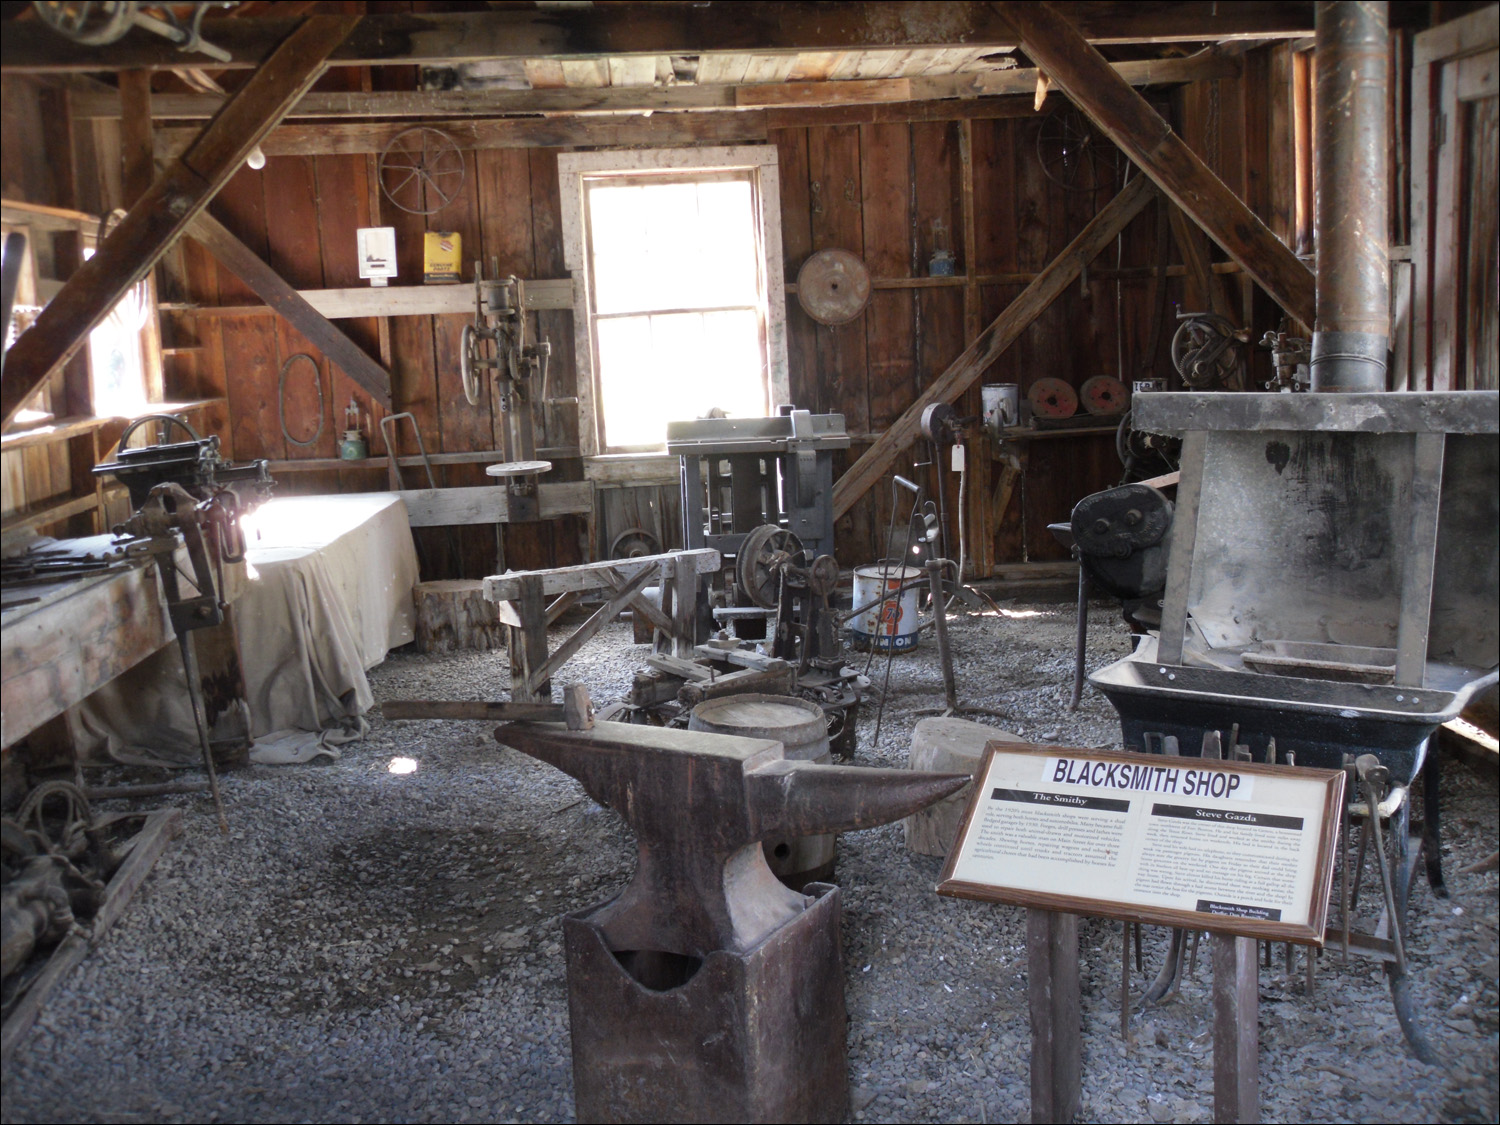 Fort Benton, MT Agriculture Museum-blacksmith shop